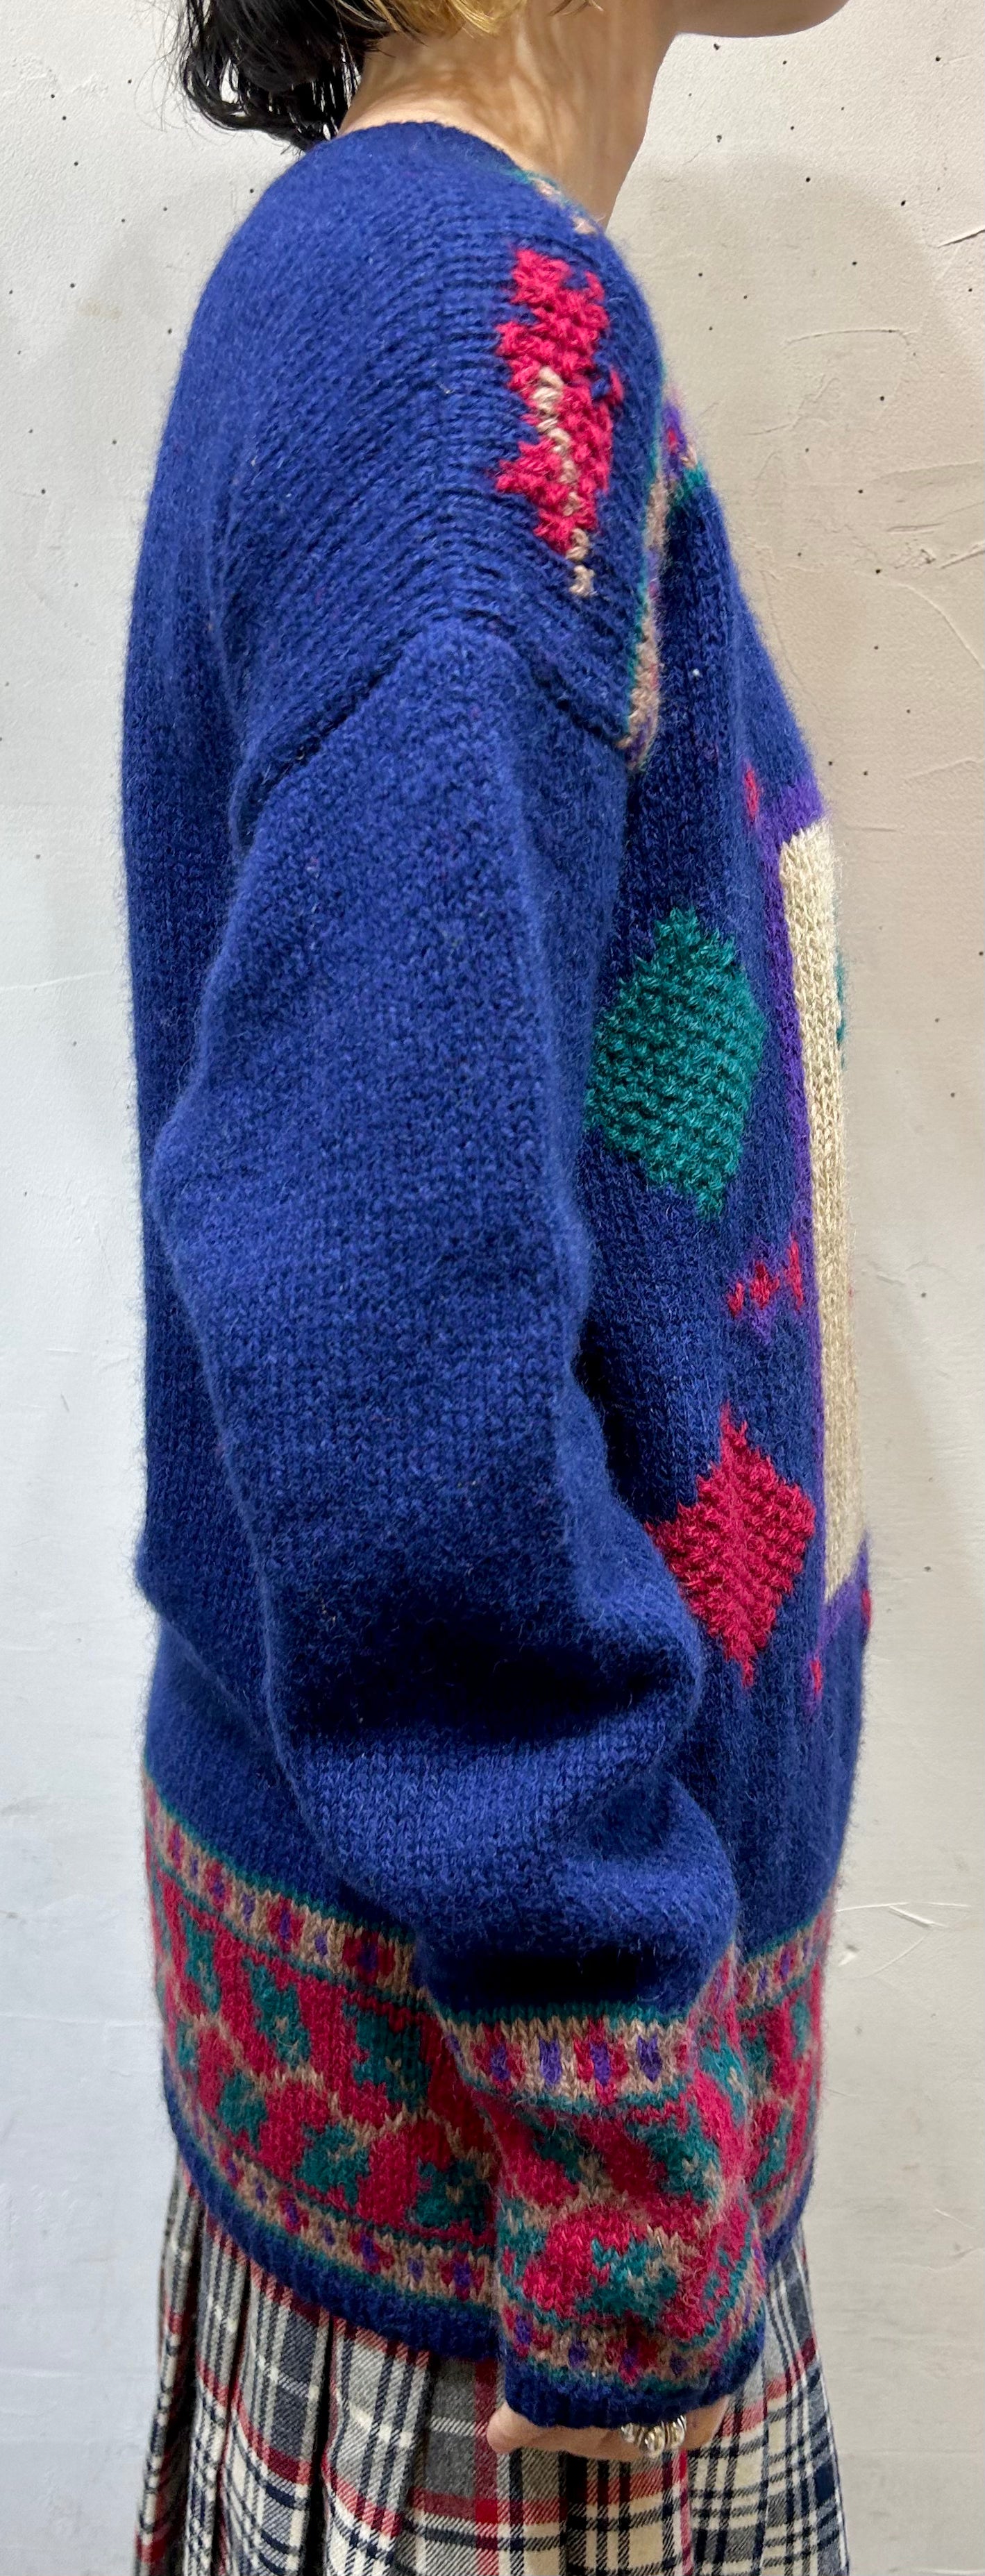 Vintage Hand Knit Sweater [L25725]